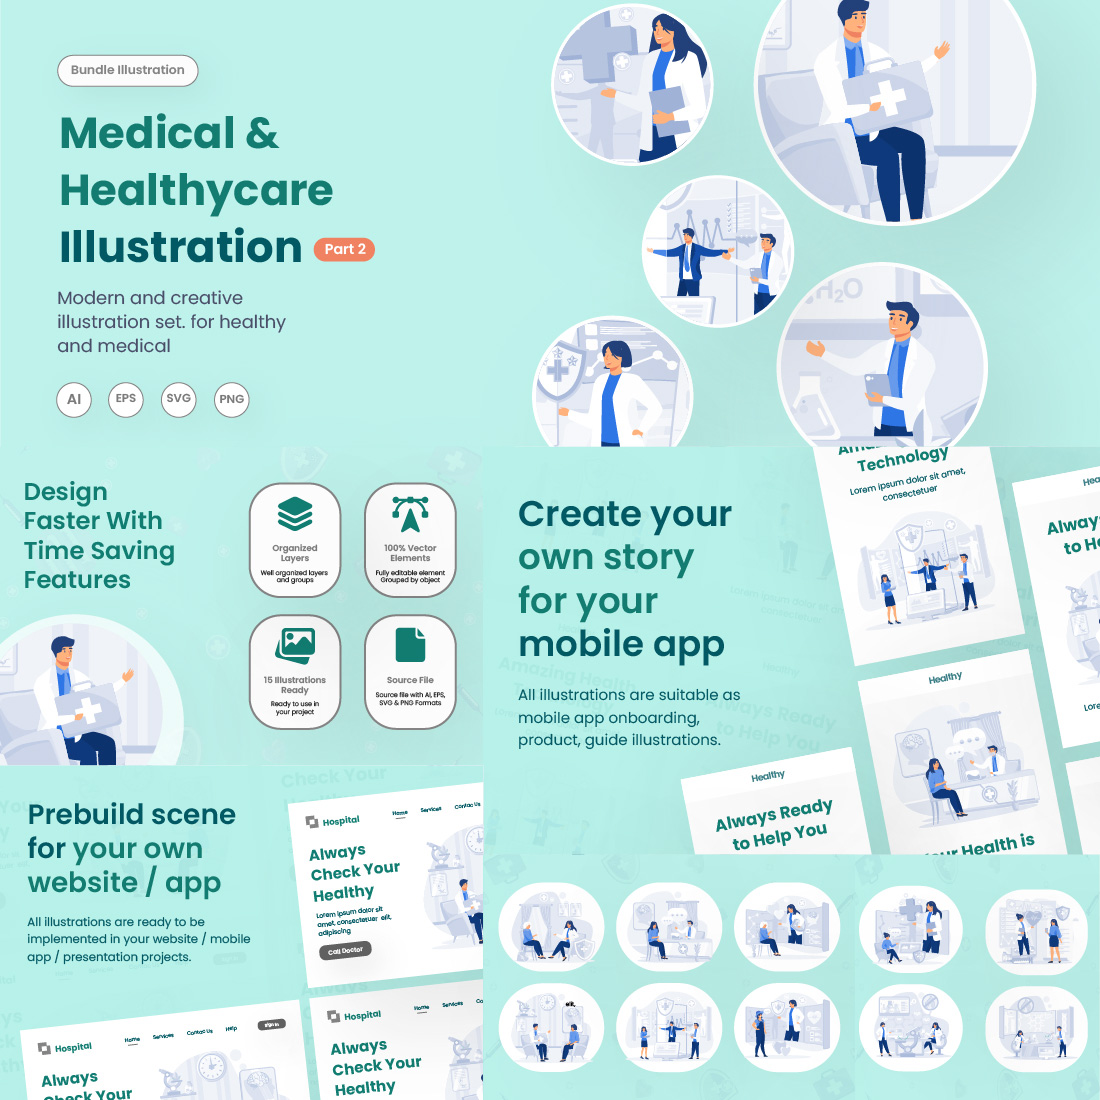 Medical & Health Care Illustration preview image.